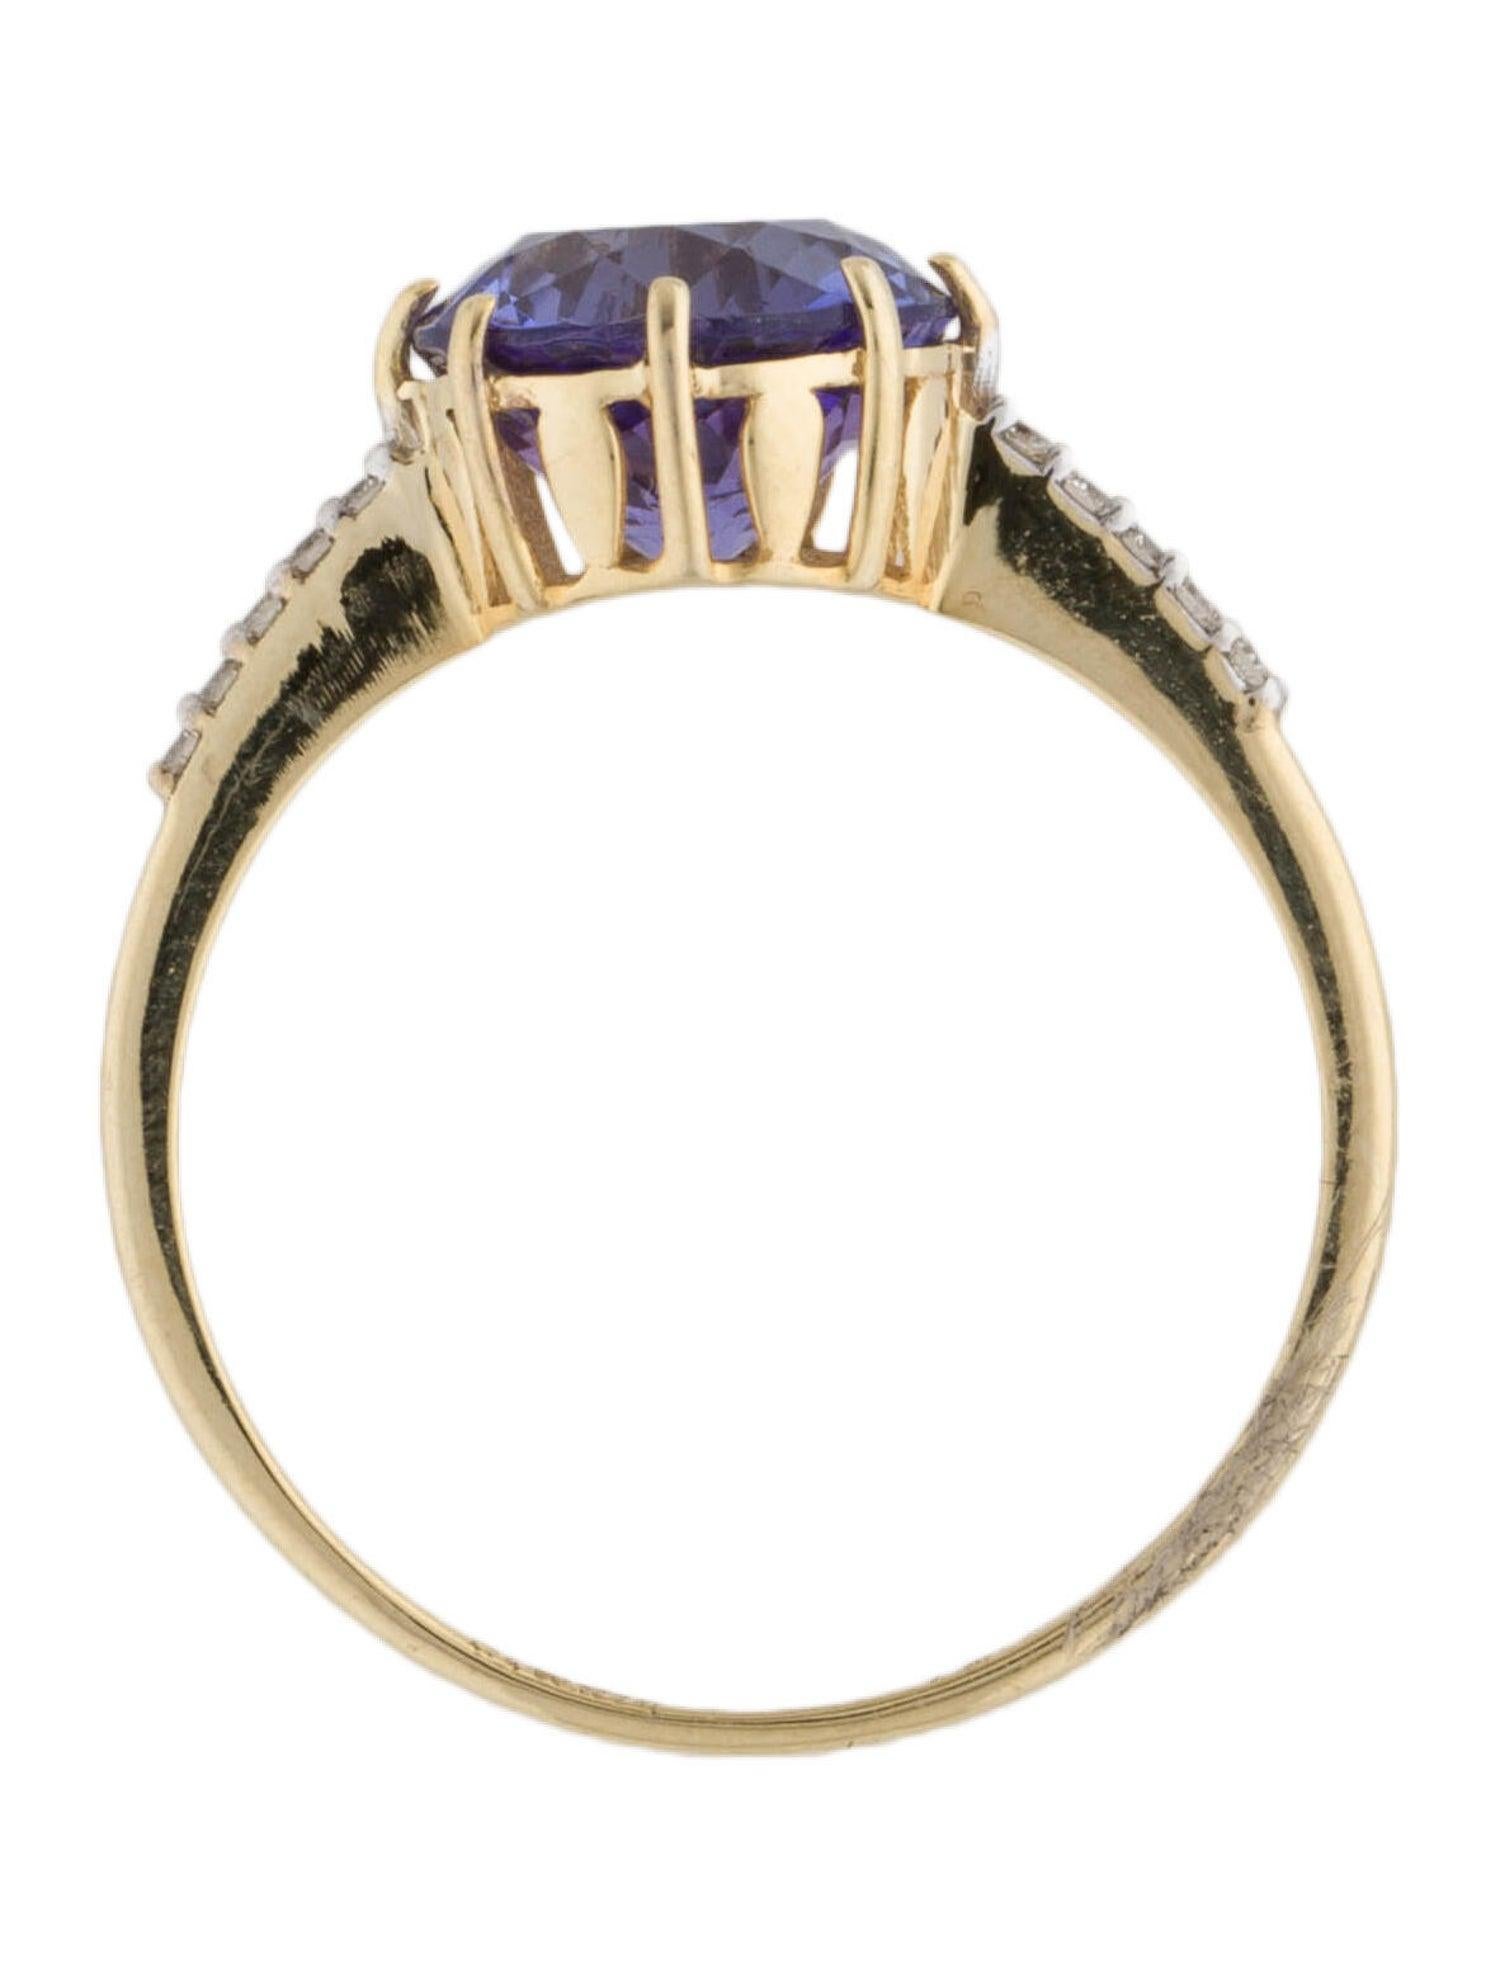 Women's Stunning 14K 2.47ct Tanzanite & Diamond Cocktail Ring, Size 7.25 - Luxury Piece For Sale